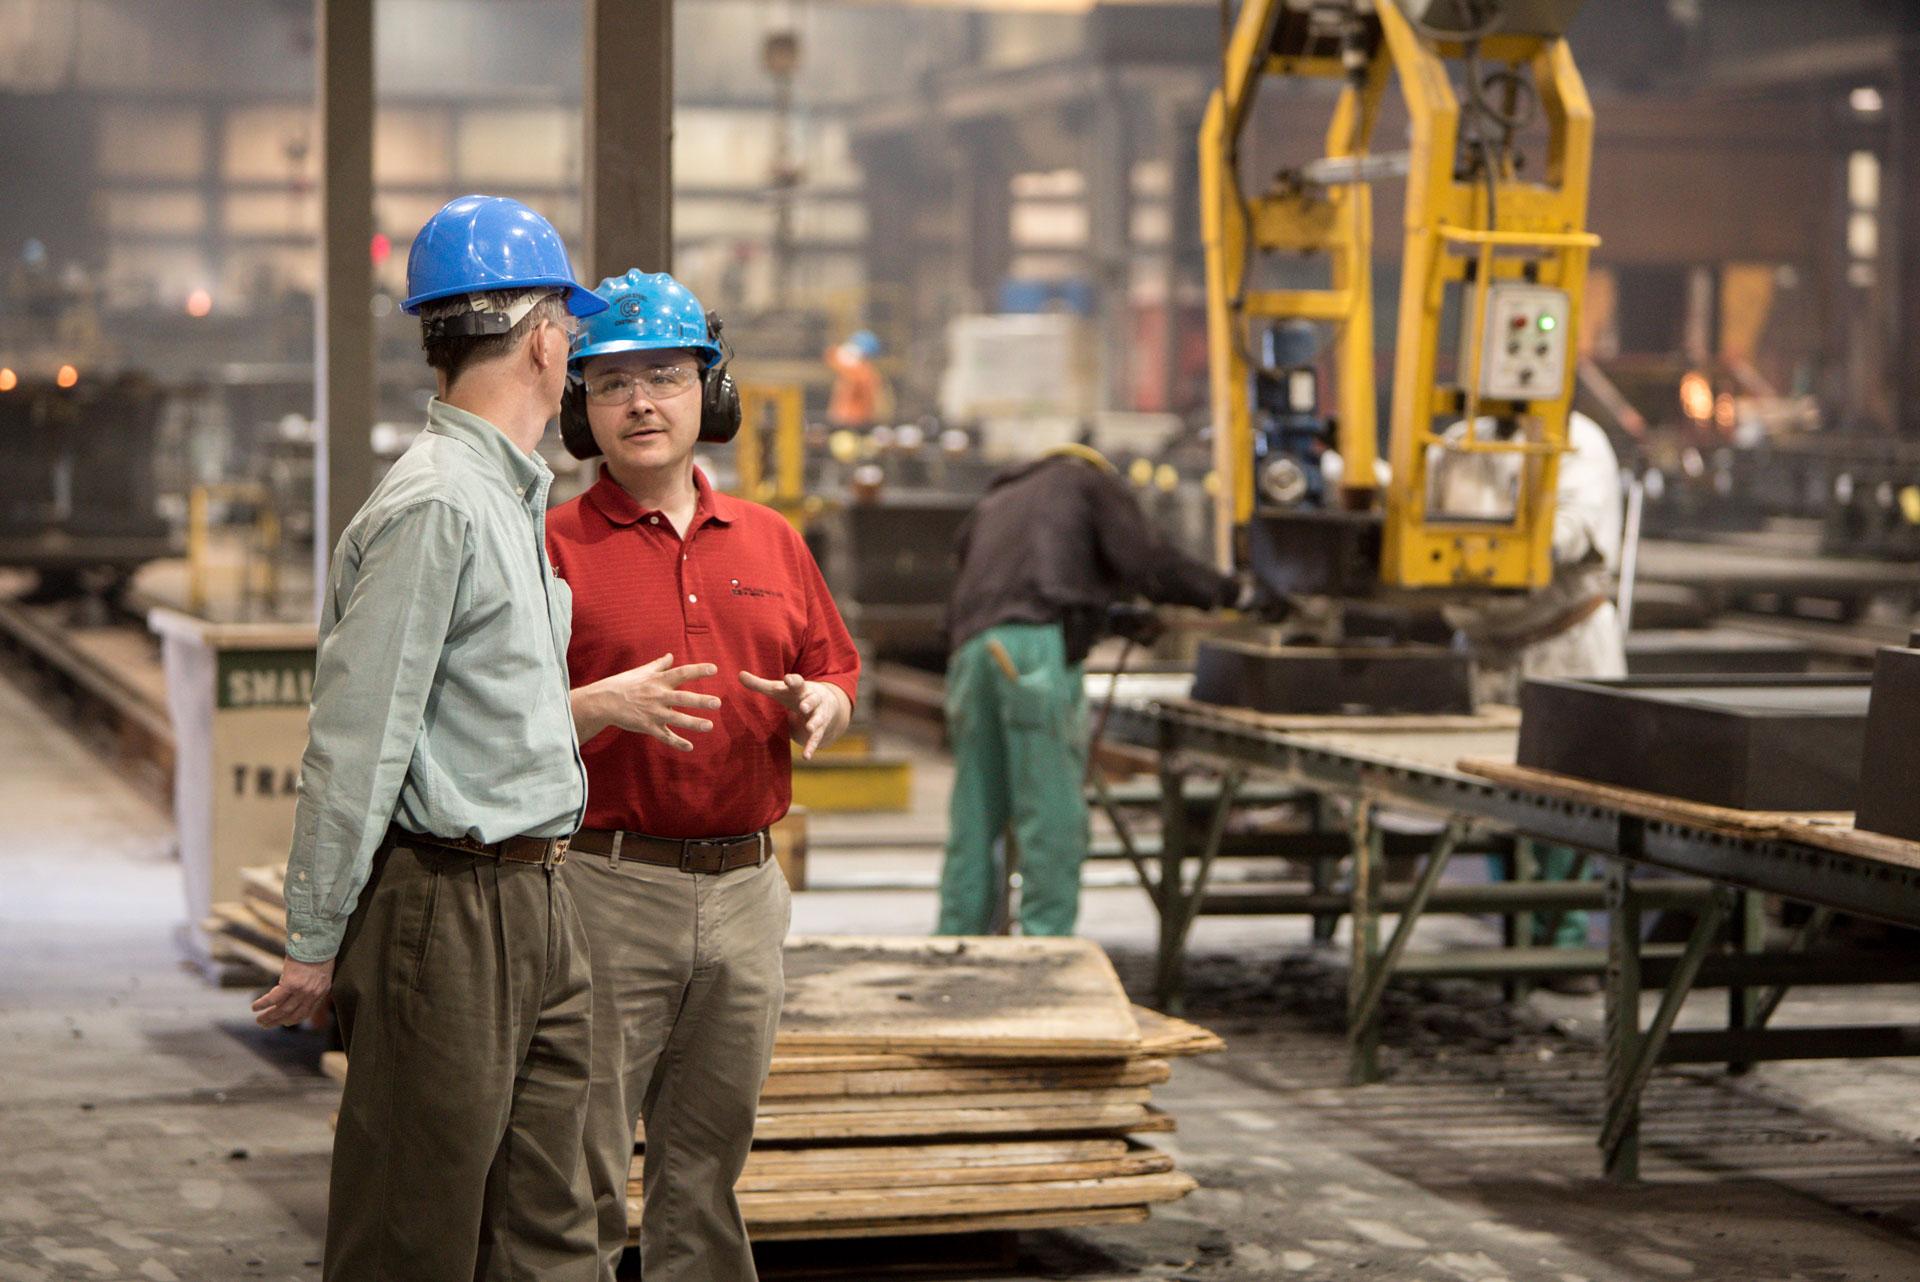 Workers conversing on factory floor